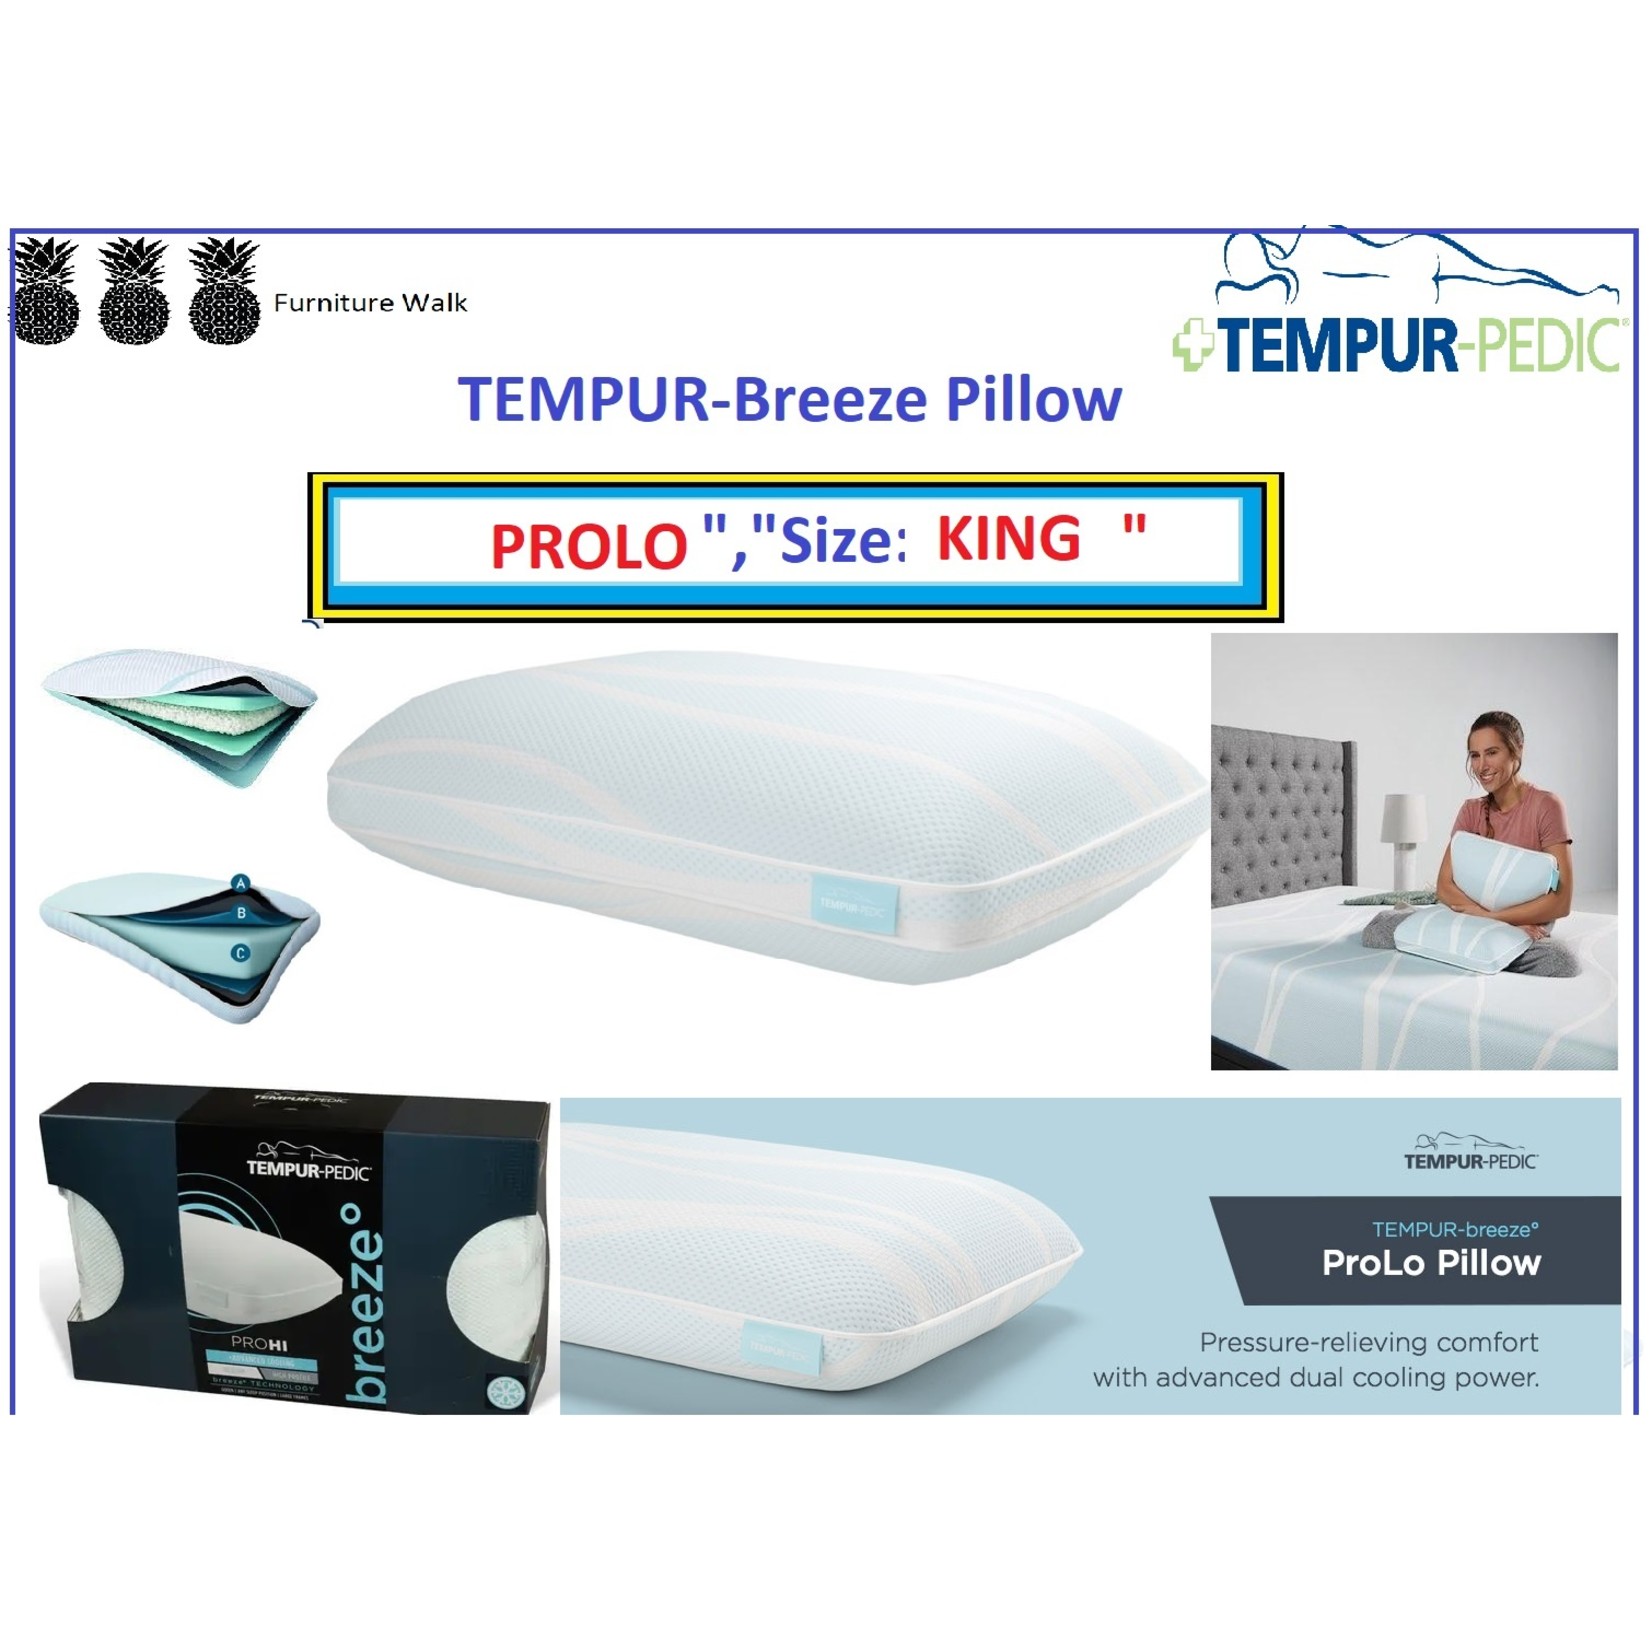 Tempur-Pedic TEMPUR-Breeze Pillow